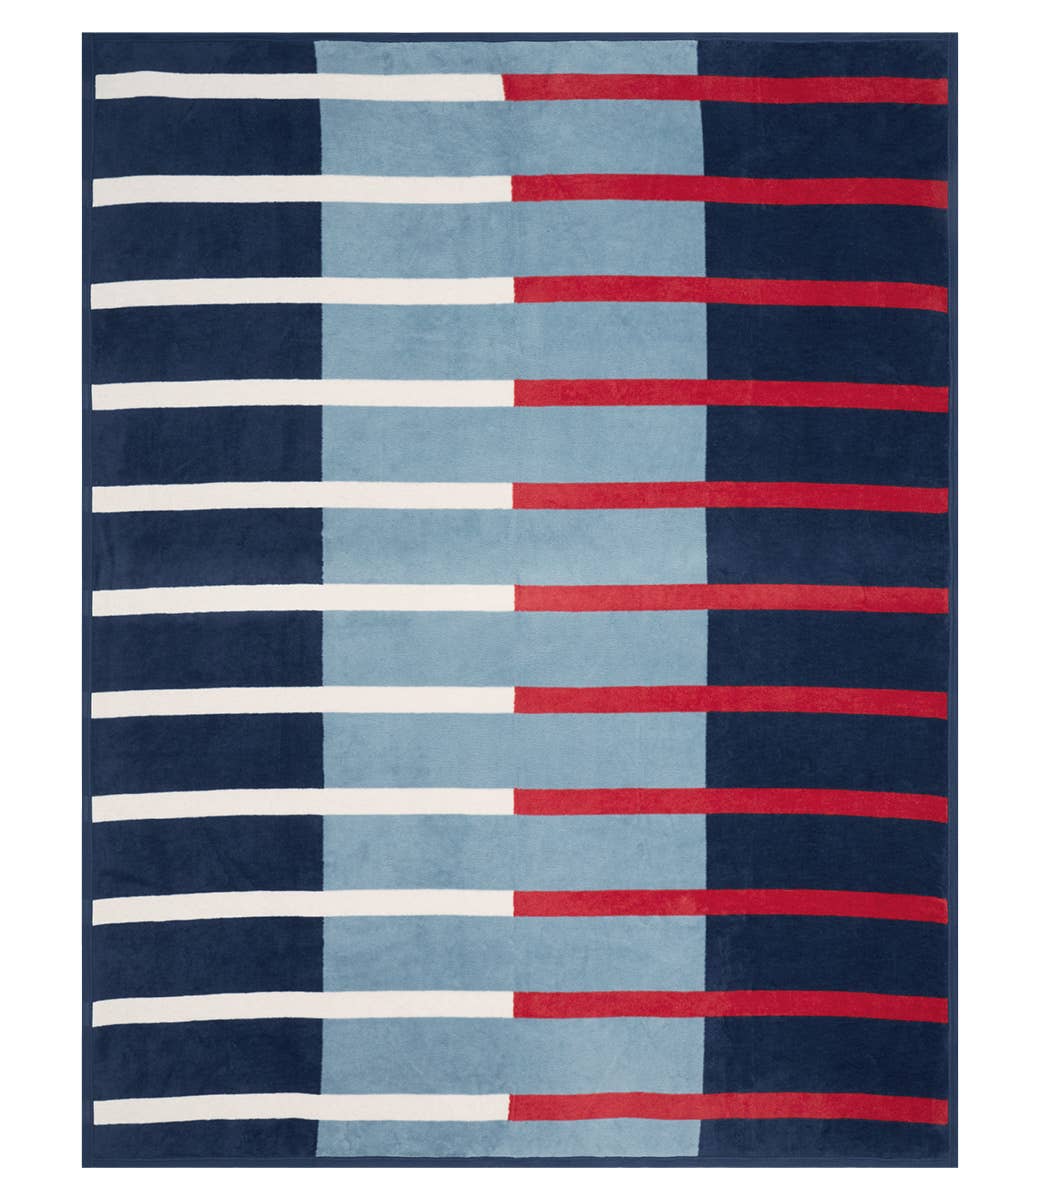 ChappyWrap Blanket- Mixed Stripes Americana